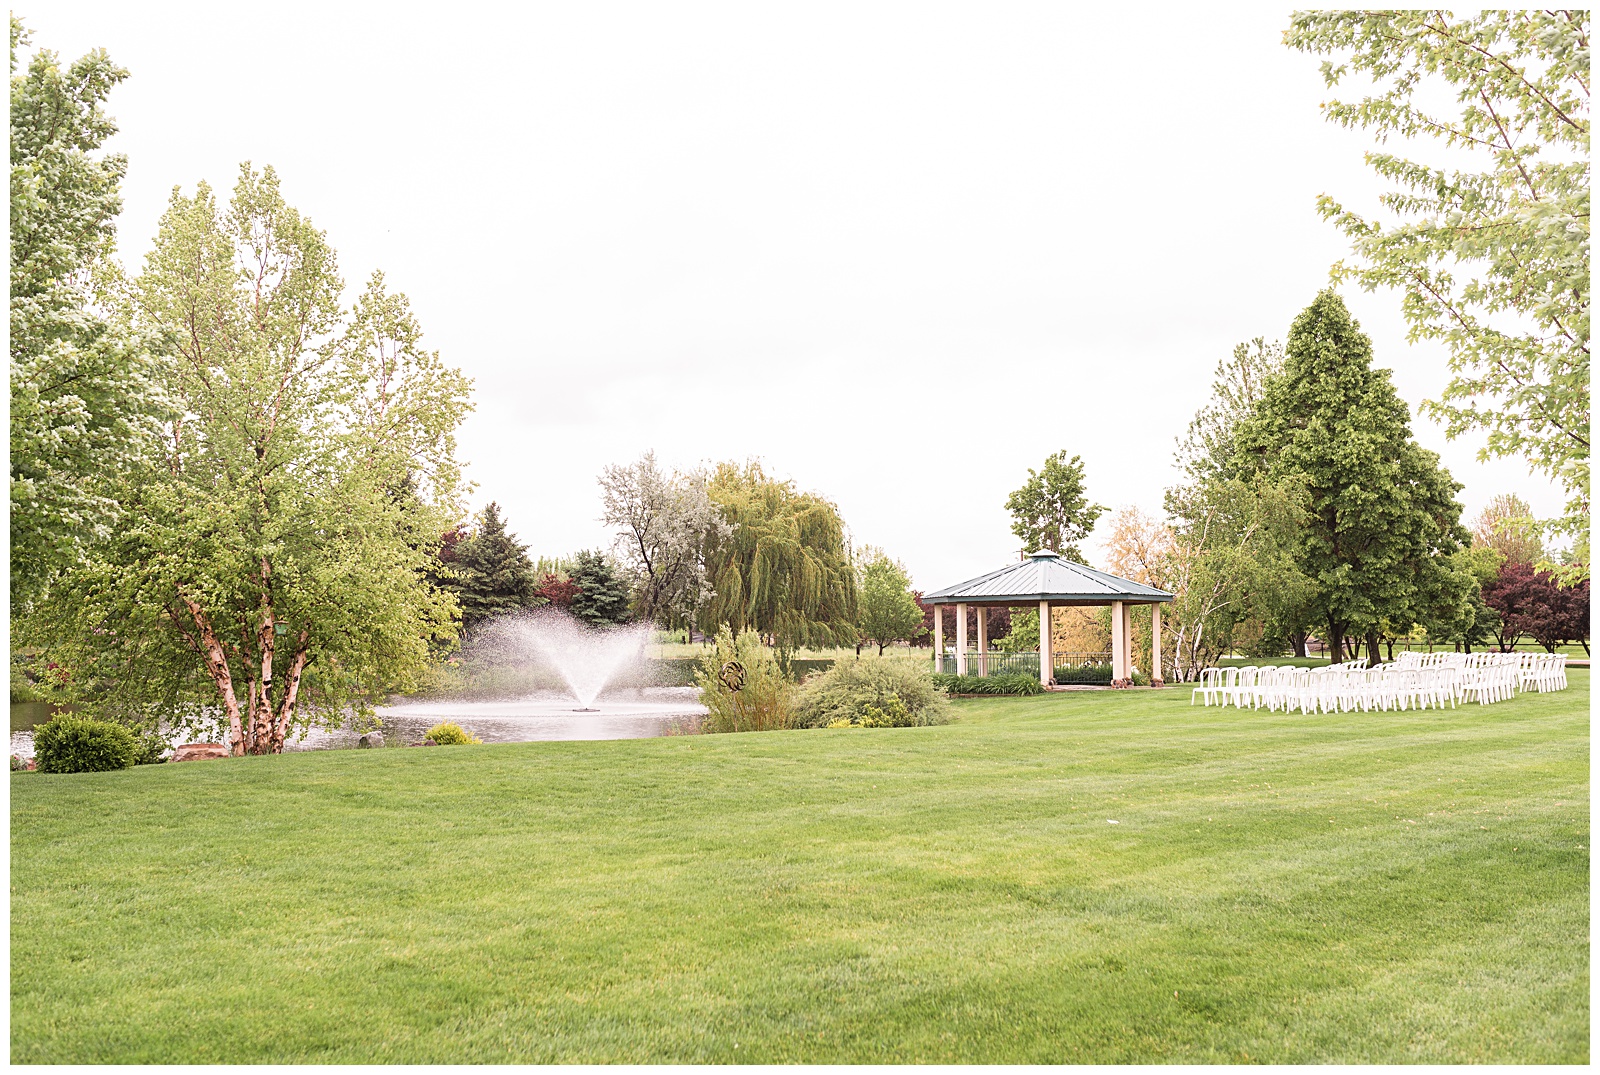 Honalee farm venue wedding,outdoor wedding,spring wedding,teal wedding,